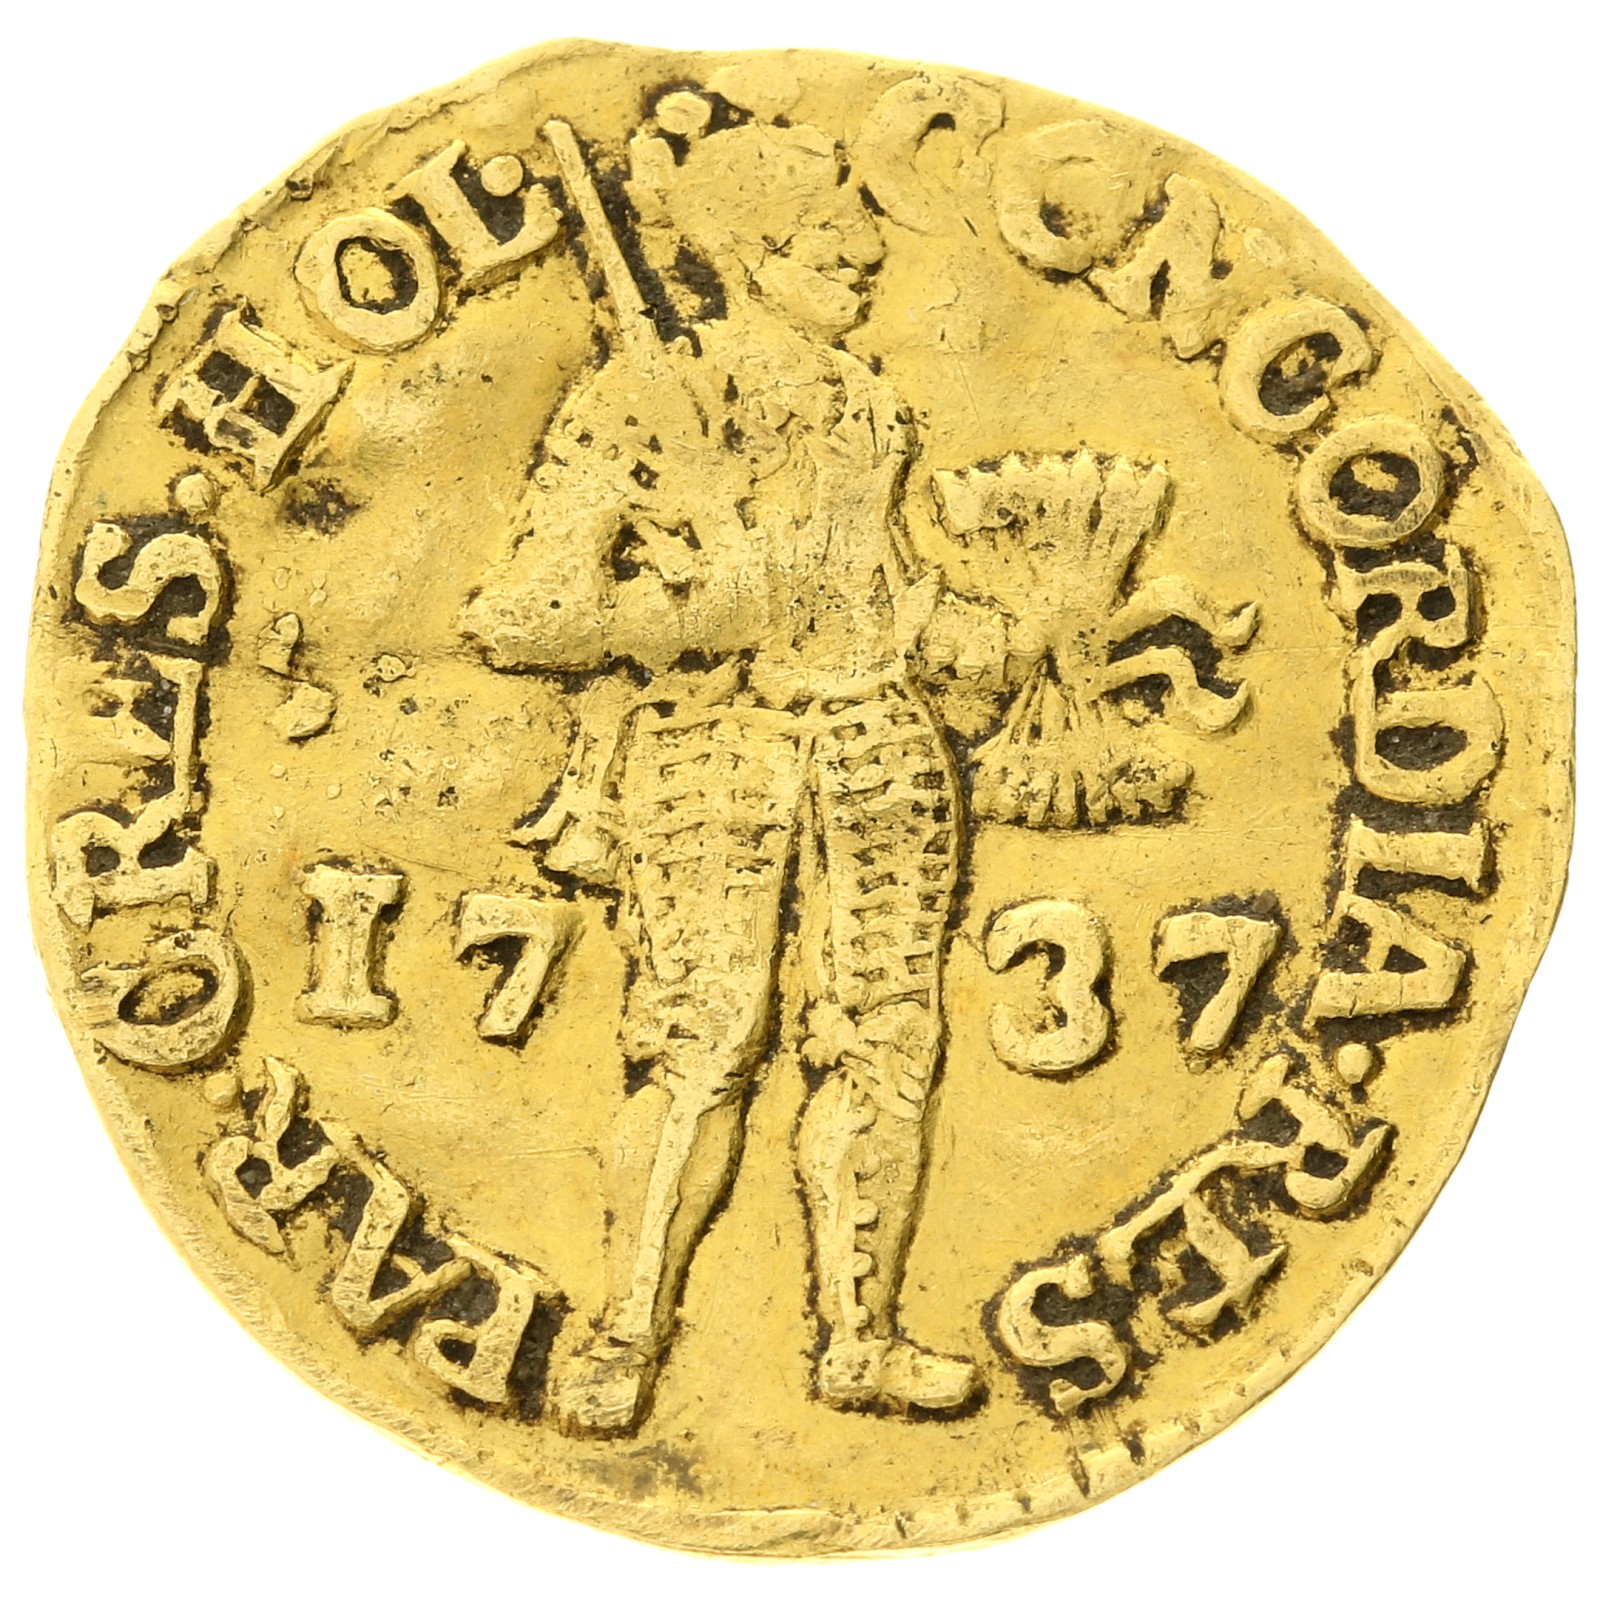 Netherlands - 1 ducat - 1737 